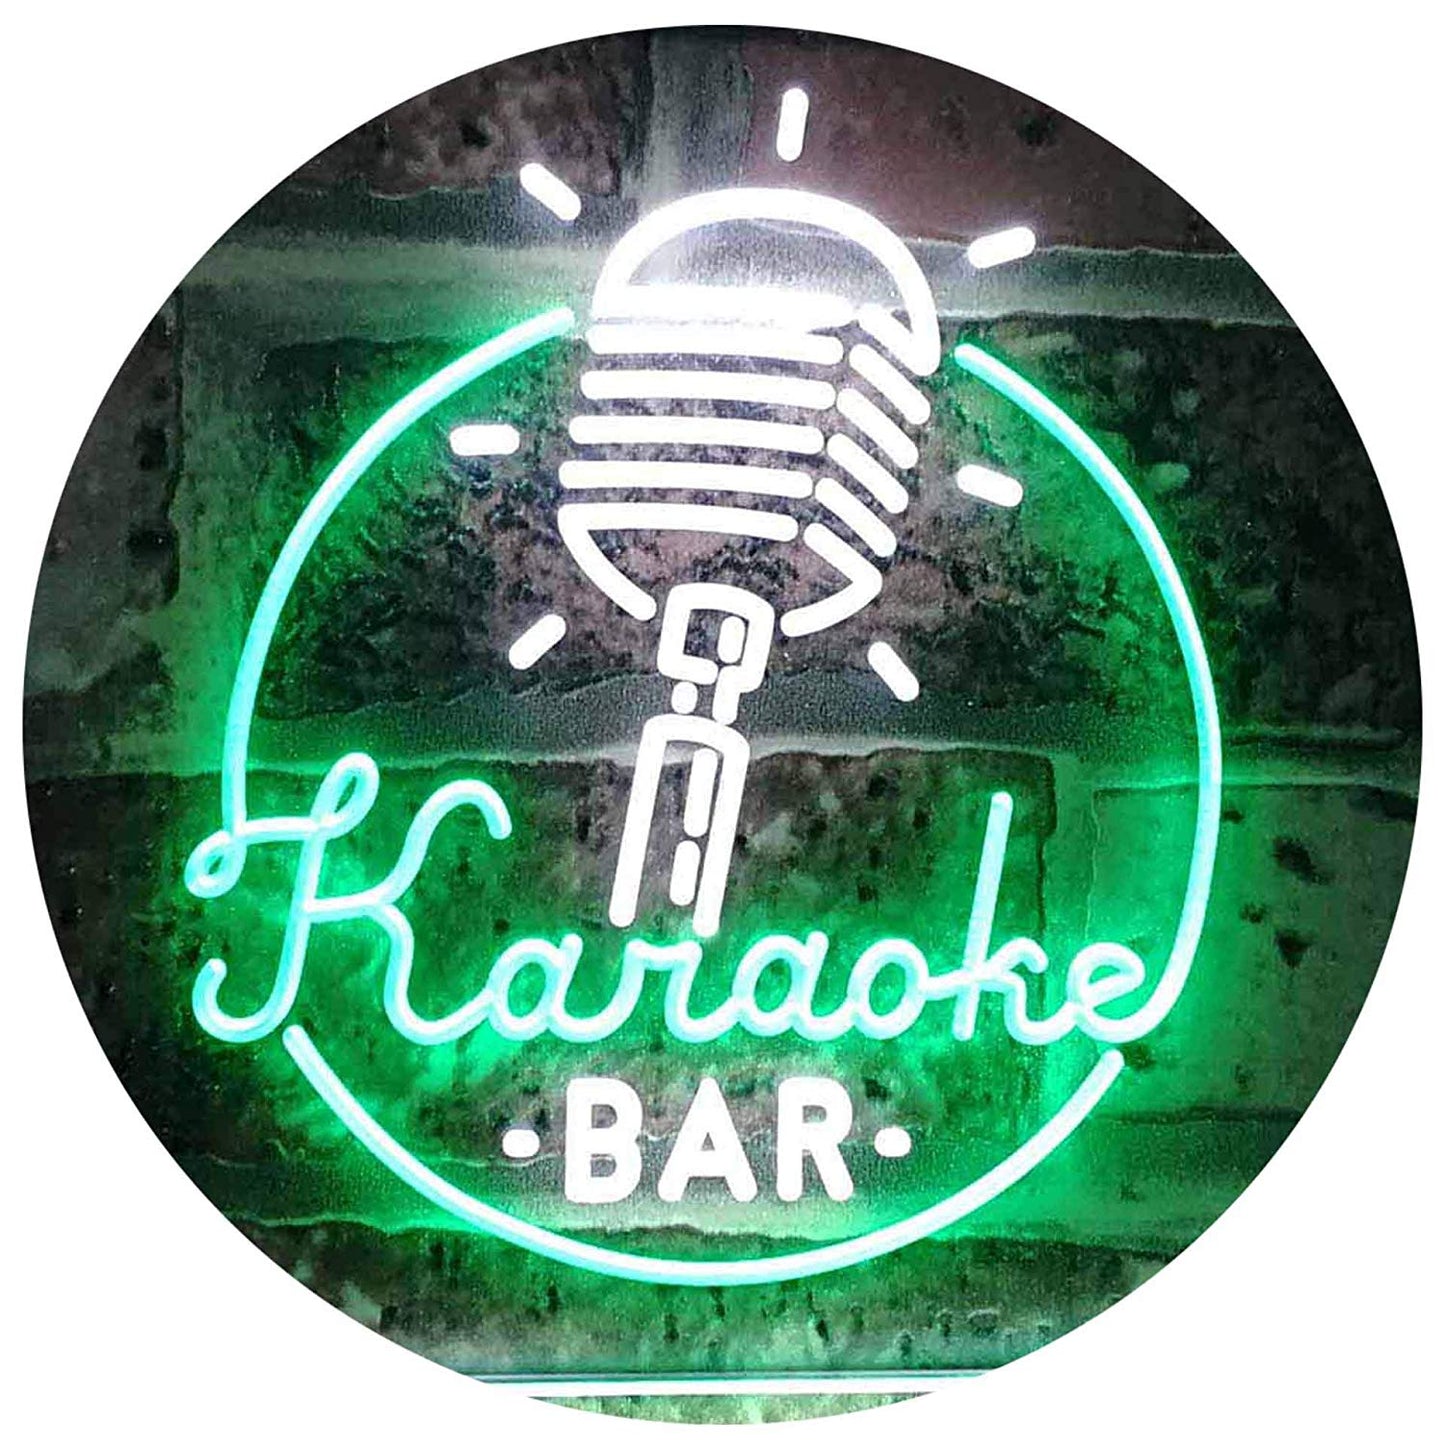 Karaoke Bar LED Neon Light Sign - Way Up Gifts